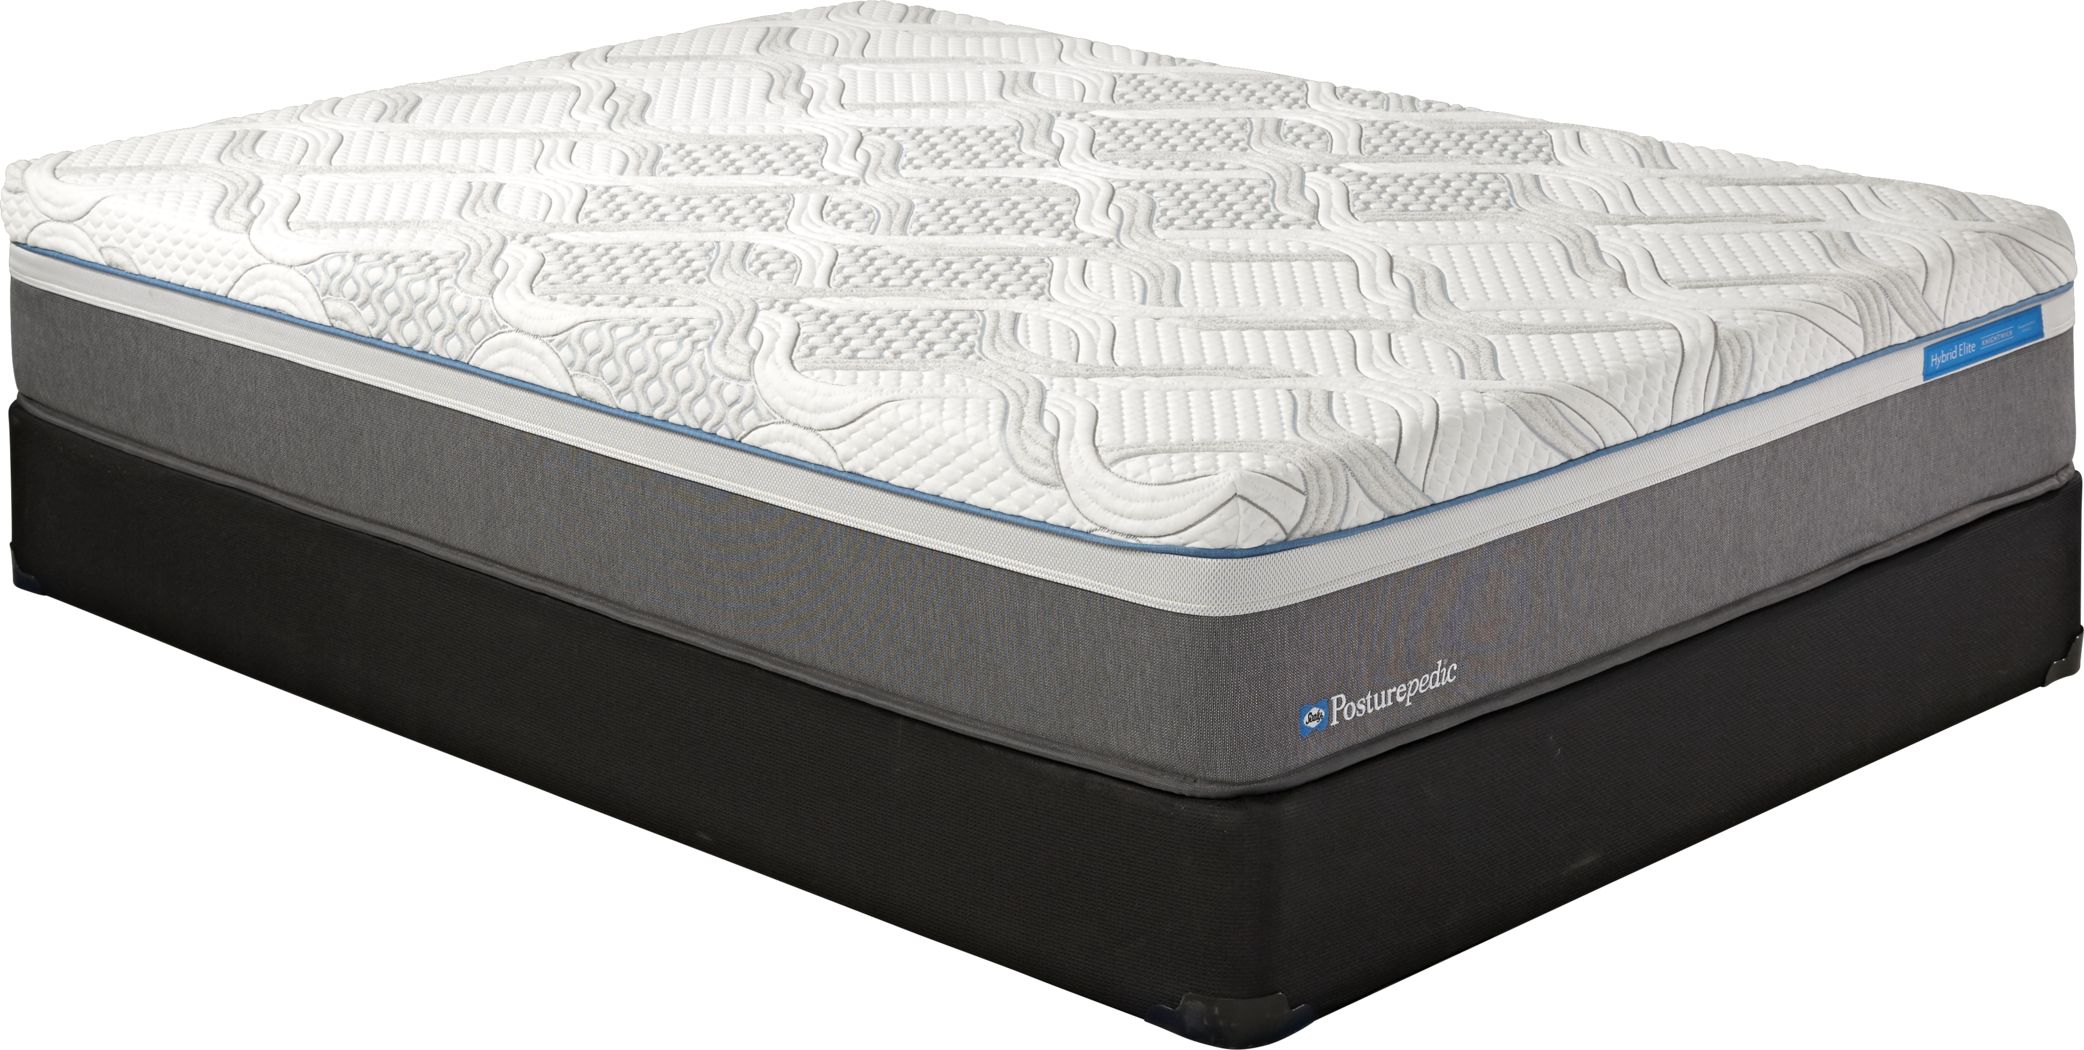 price for a posturepedic hybrid queen mattress